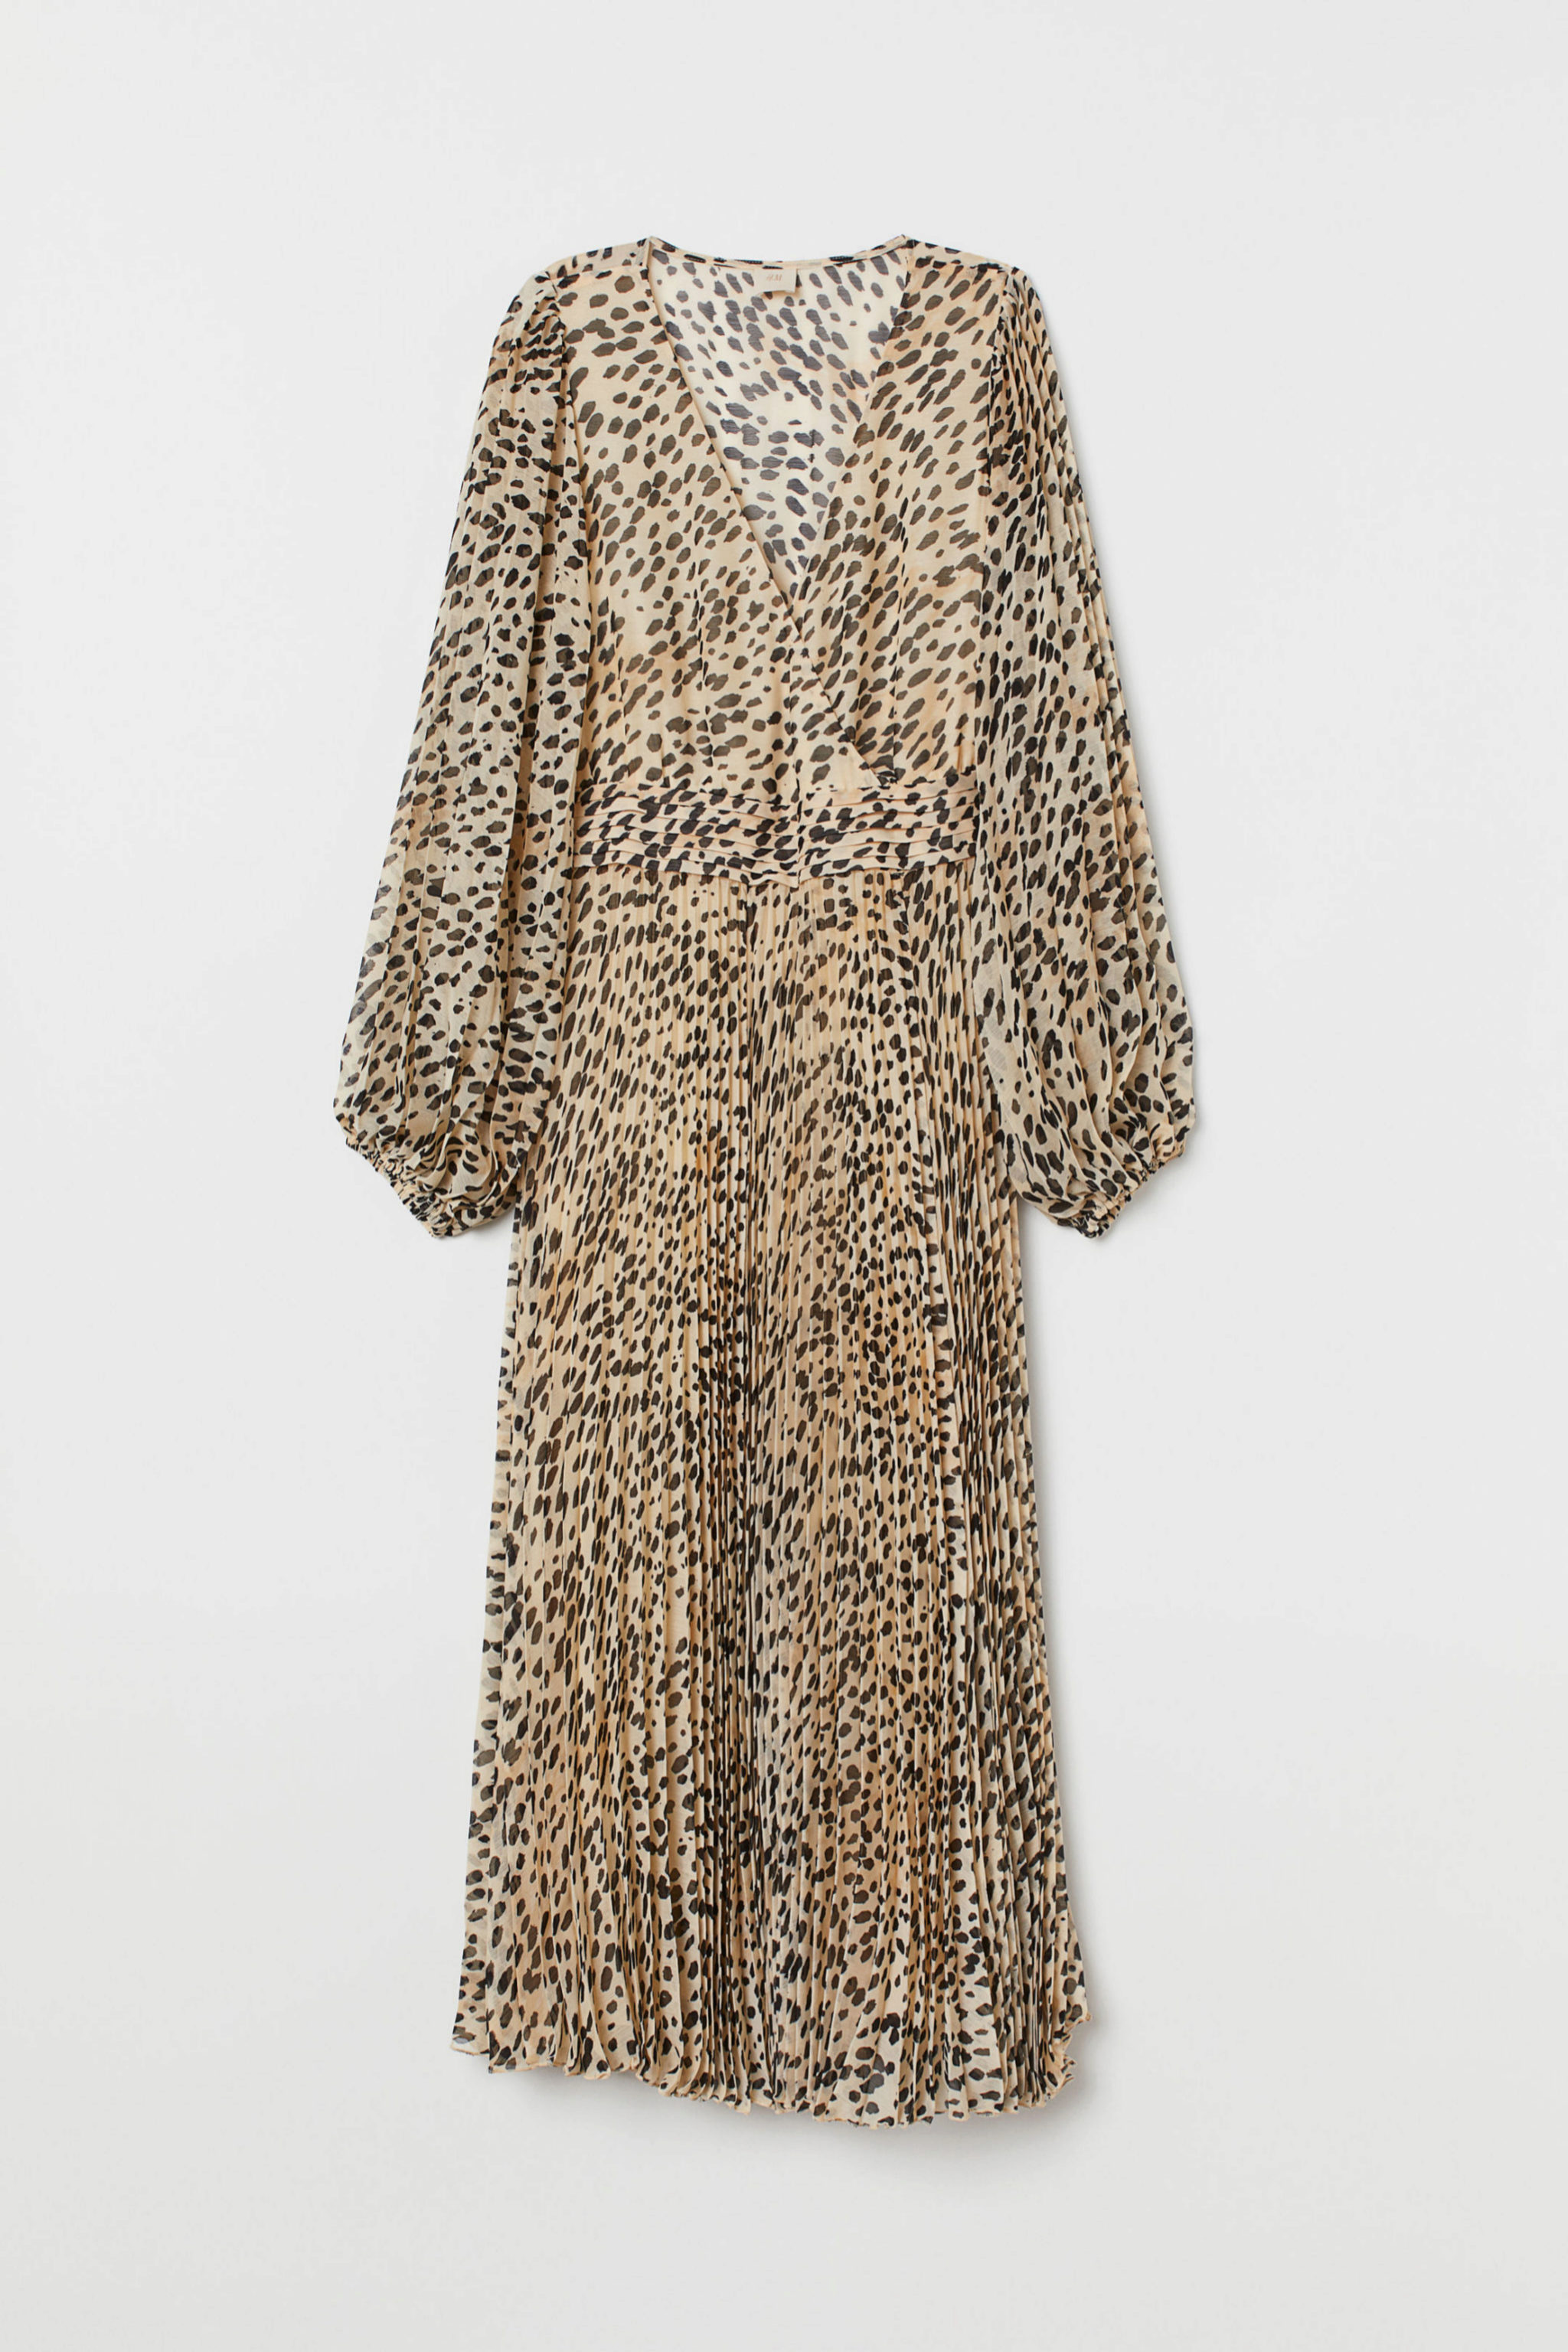 Vestido de manga larga con estampado de leopardo de H&M (59,95¤)